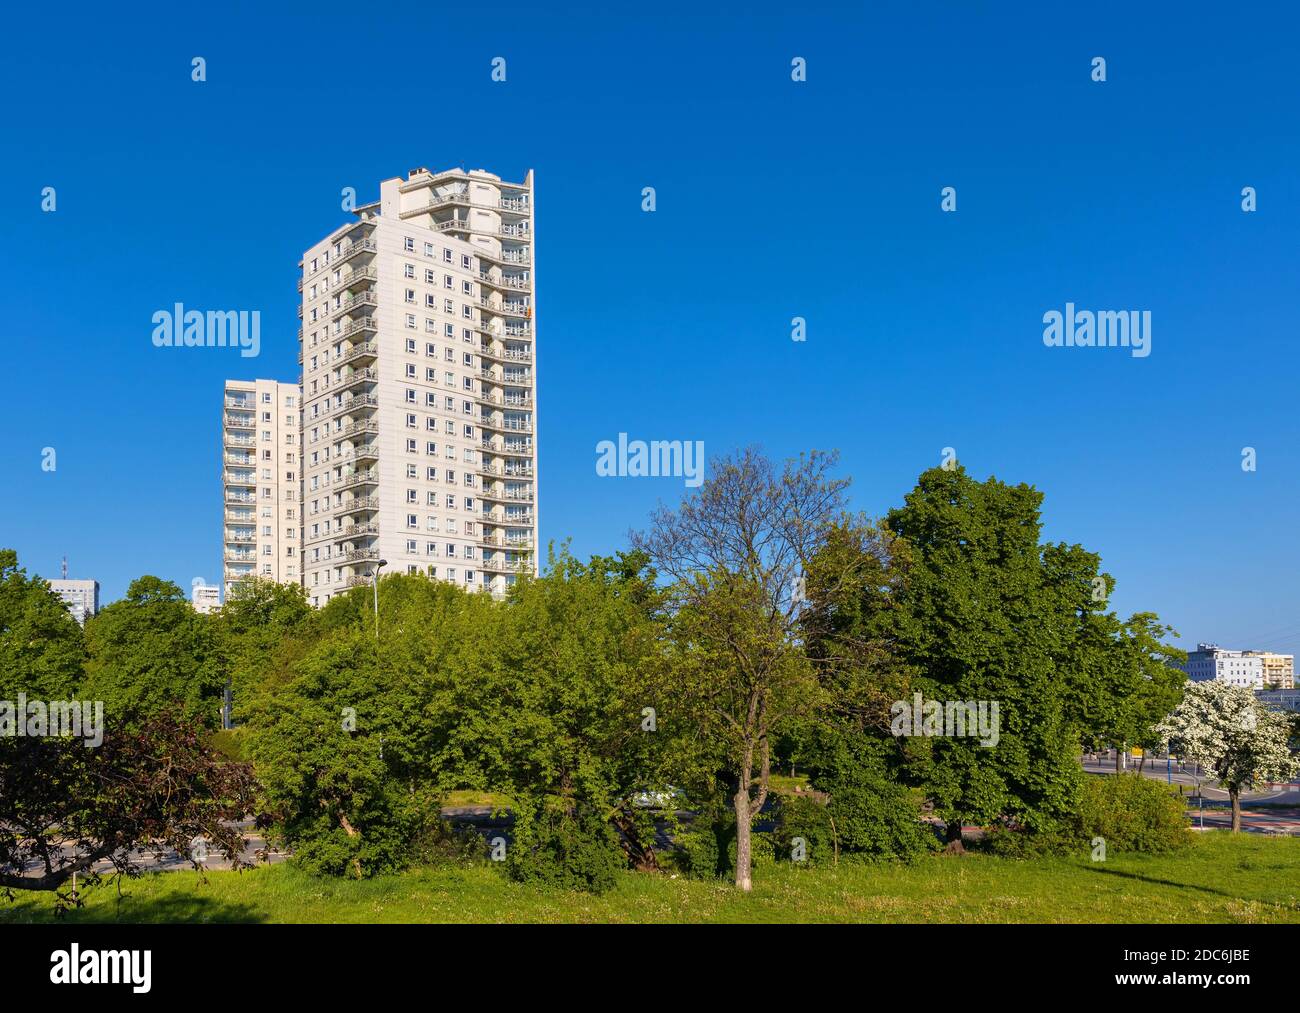 Warsaw, Mazovia / Poland - 2020/05/10: Osiedle Prezydenckie - Presidential Condominium - large scale residential development at Slonimskiego street in Stock Photo